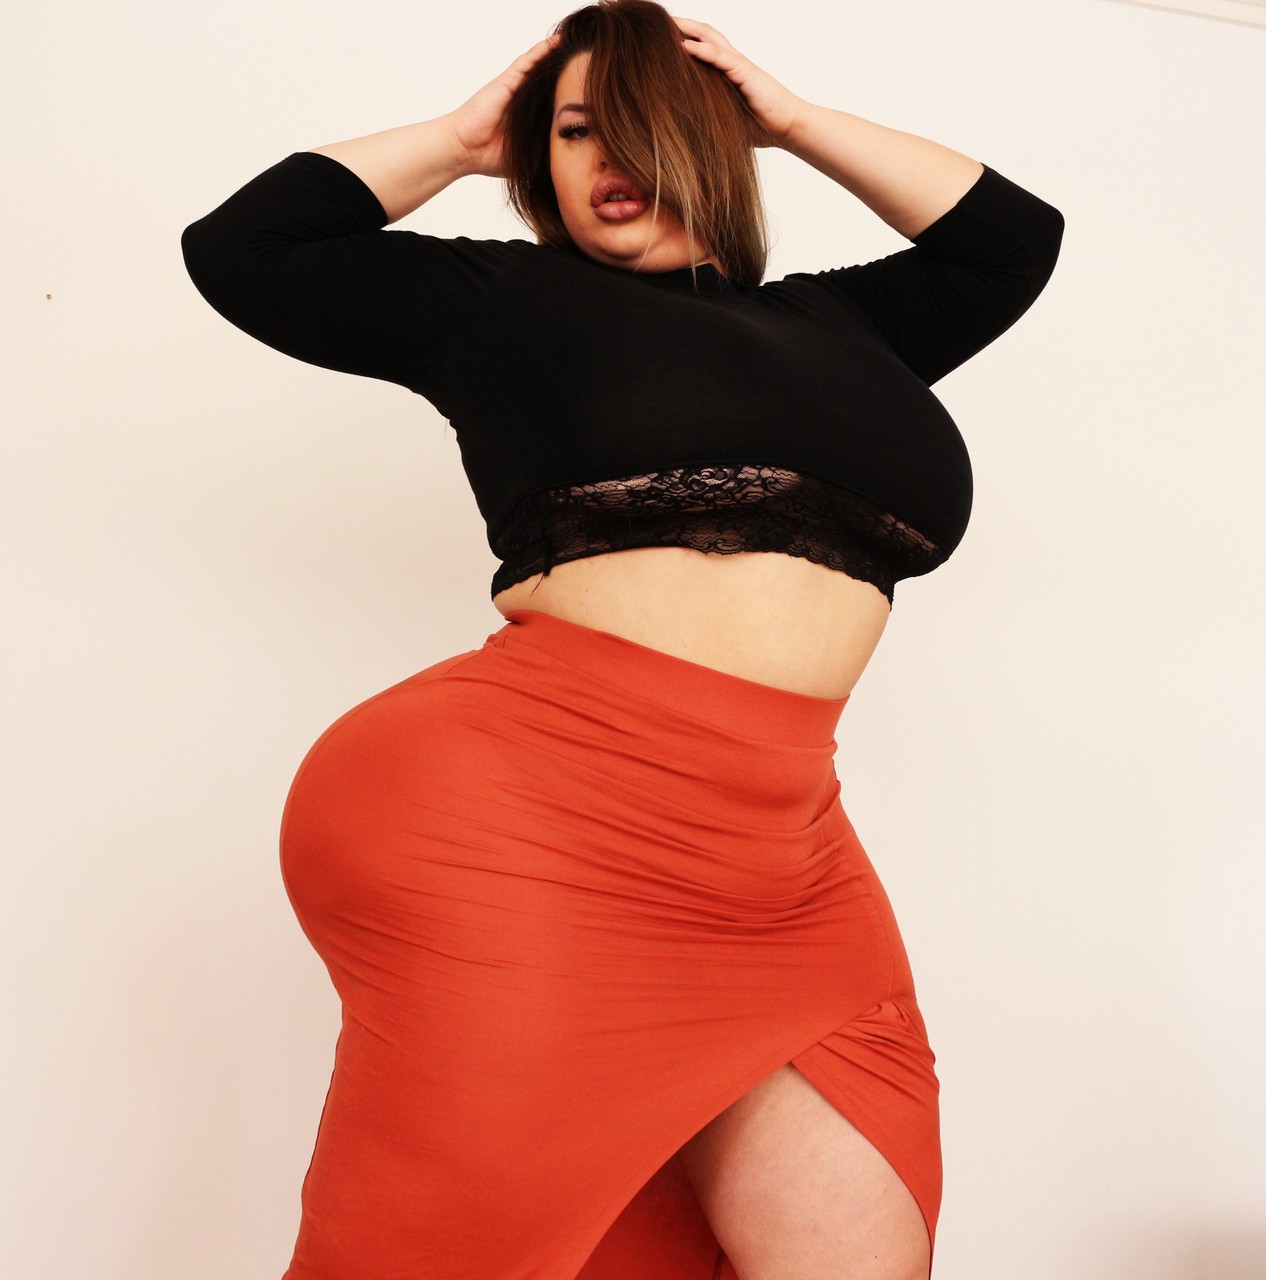 Stunning MILF fatty Natasha Crown flaunting her very big ass in a tight skirt ポルノ写真 #423816664 | Natasha Crown Pics, Natasha Crown, BBW, モバイルポルノ